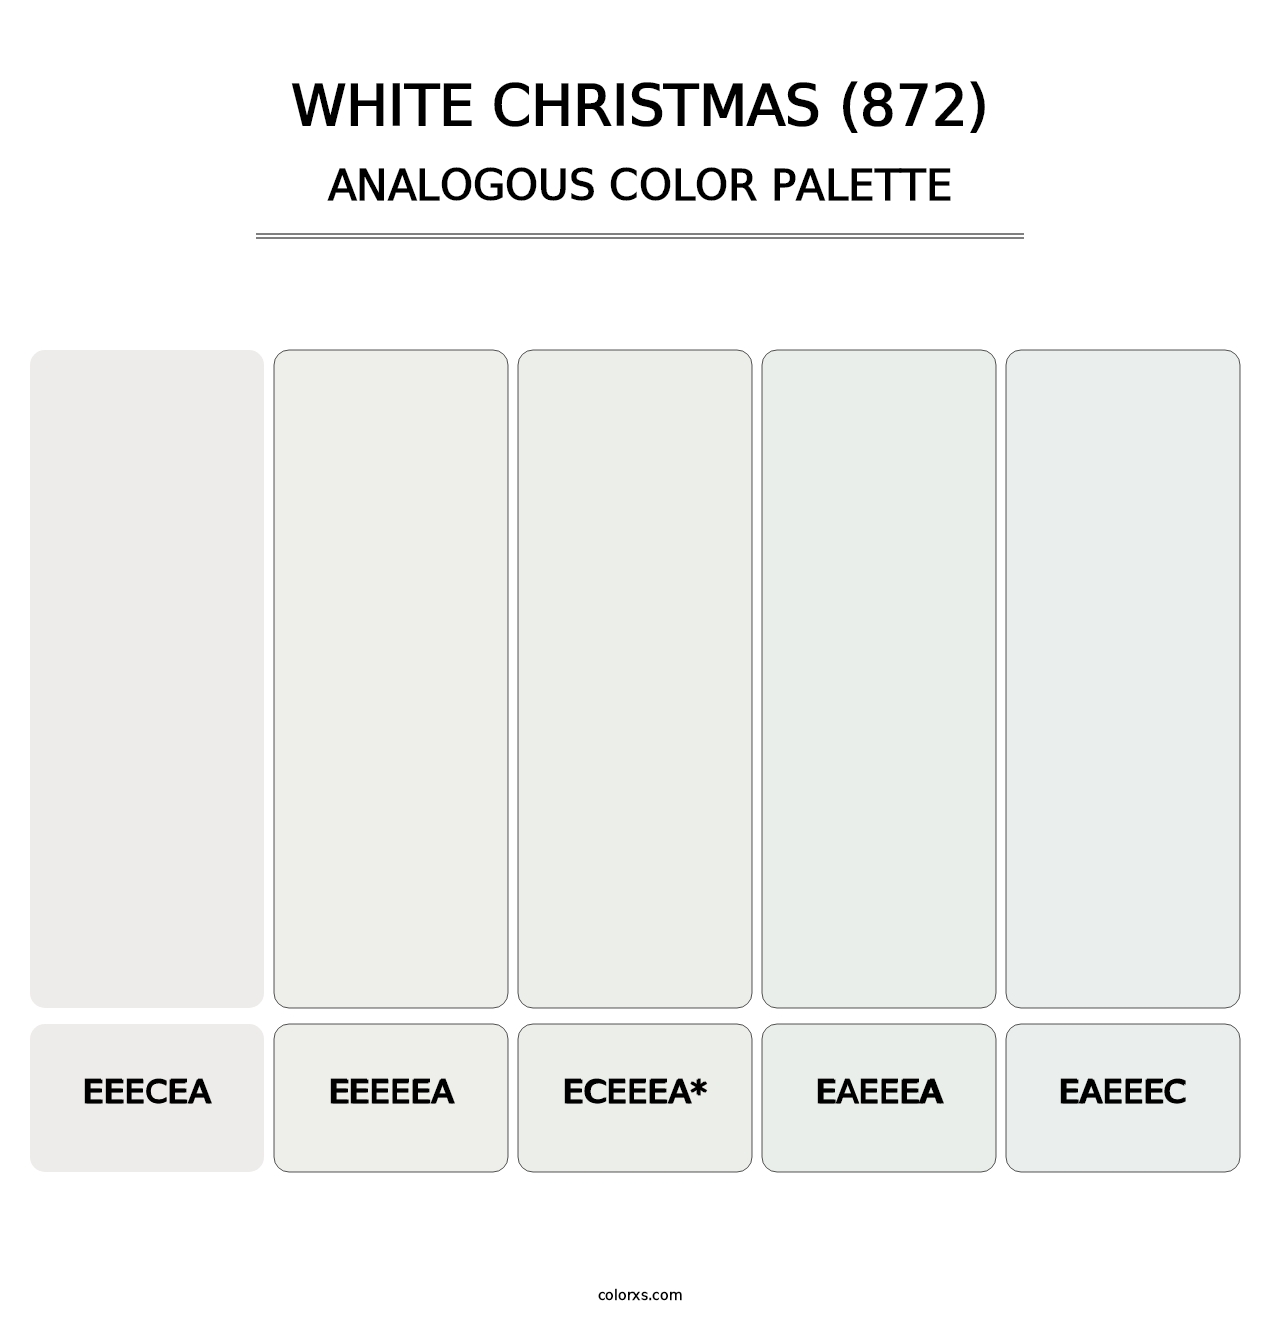 White Christmas (872) - Analogous Color Palette